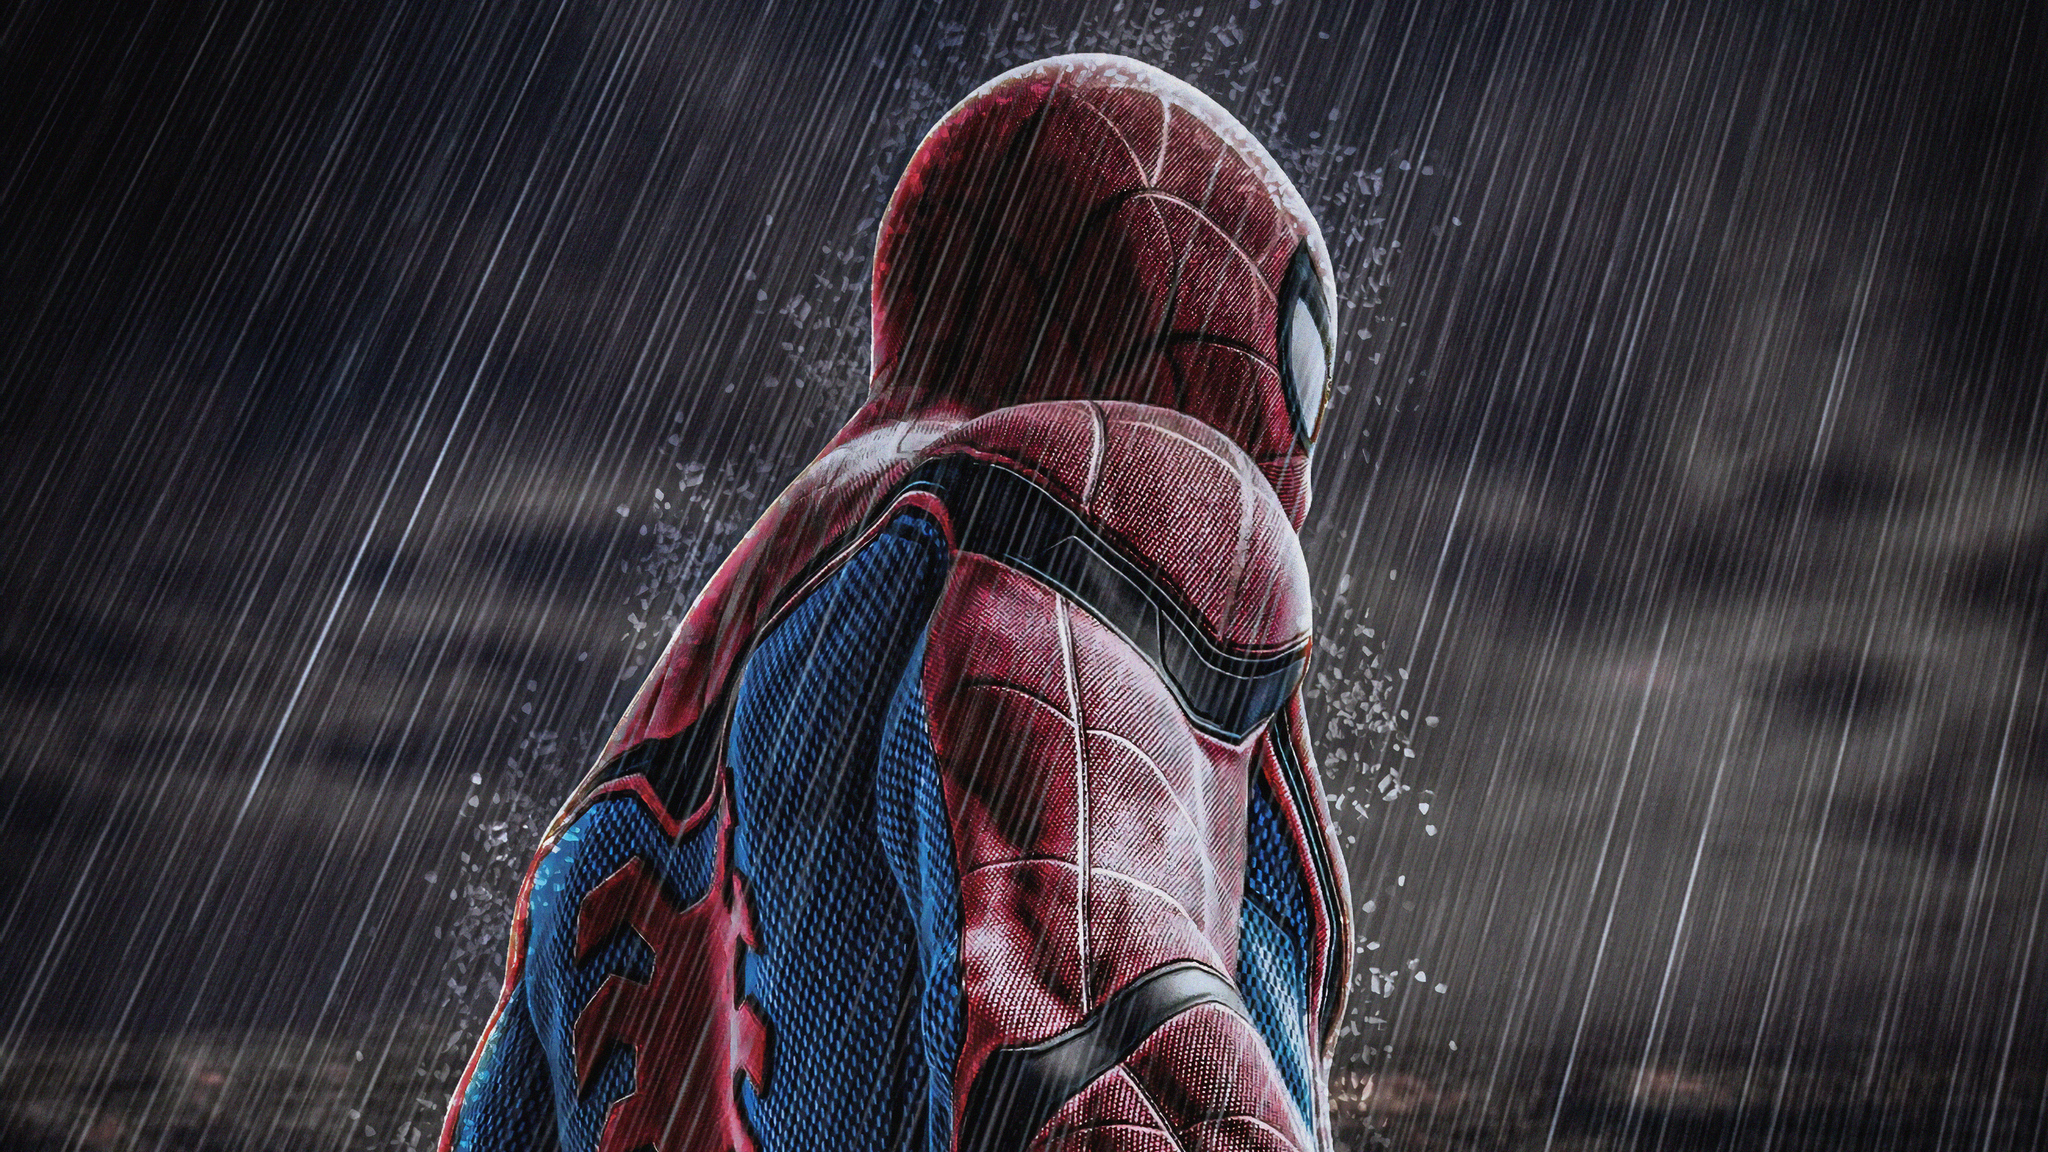 Spiderman In Rain 4k In 2048x1152 Resolution. spiderman-in-rain-4k-1d.jpg. 